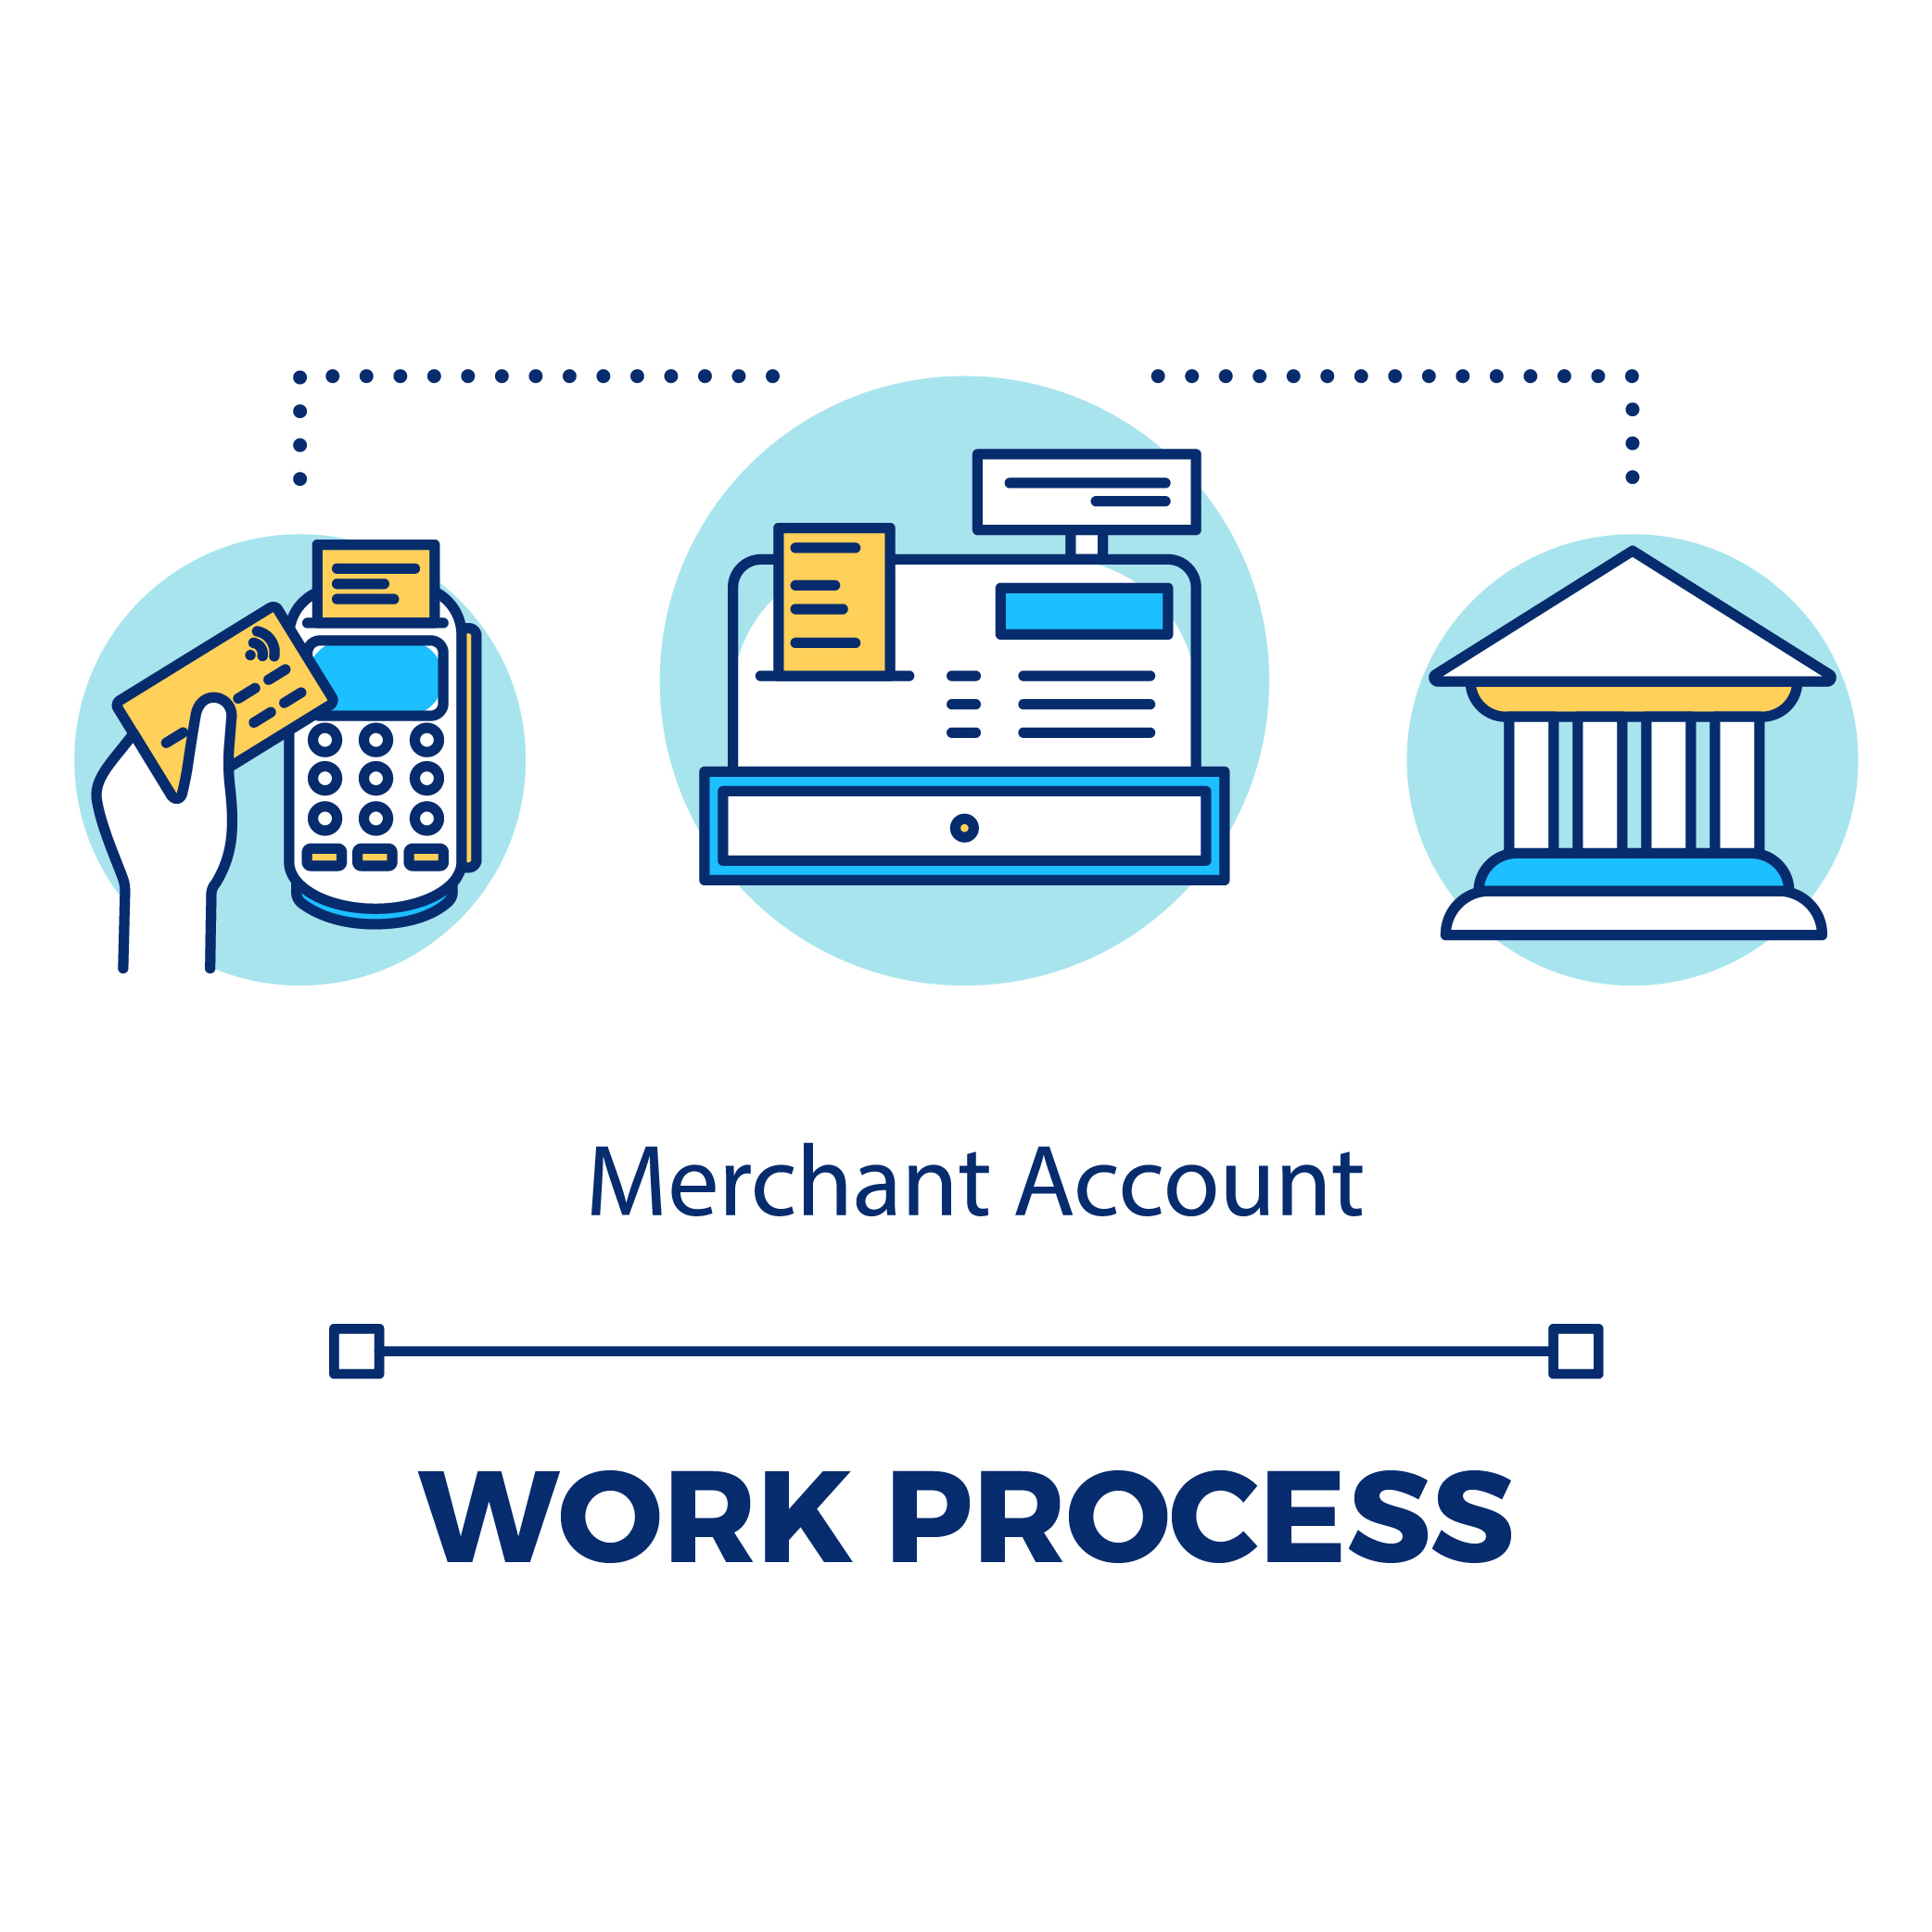 echeck payment solutions, echeck, electronic check, merchant services